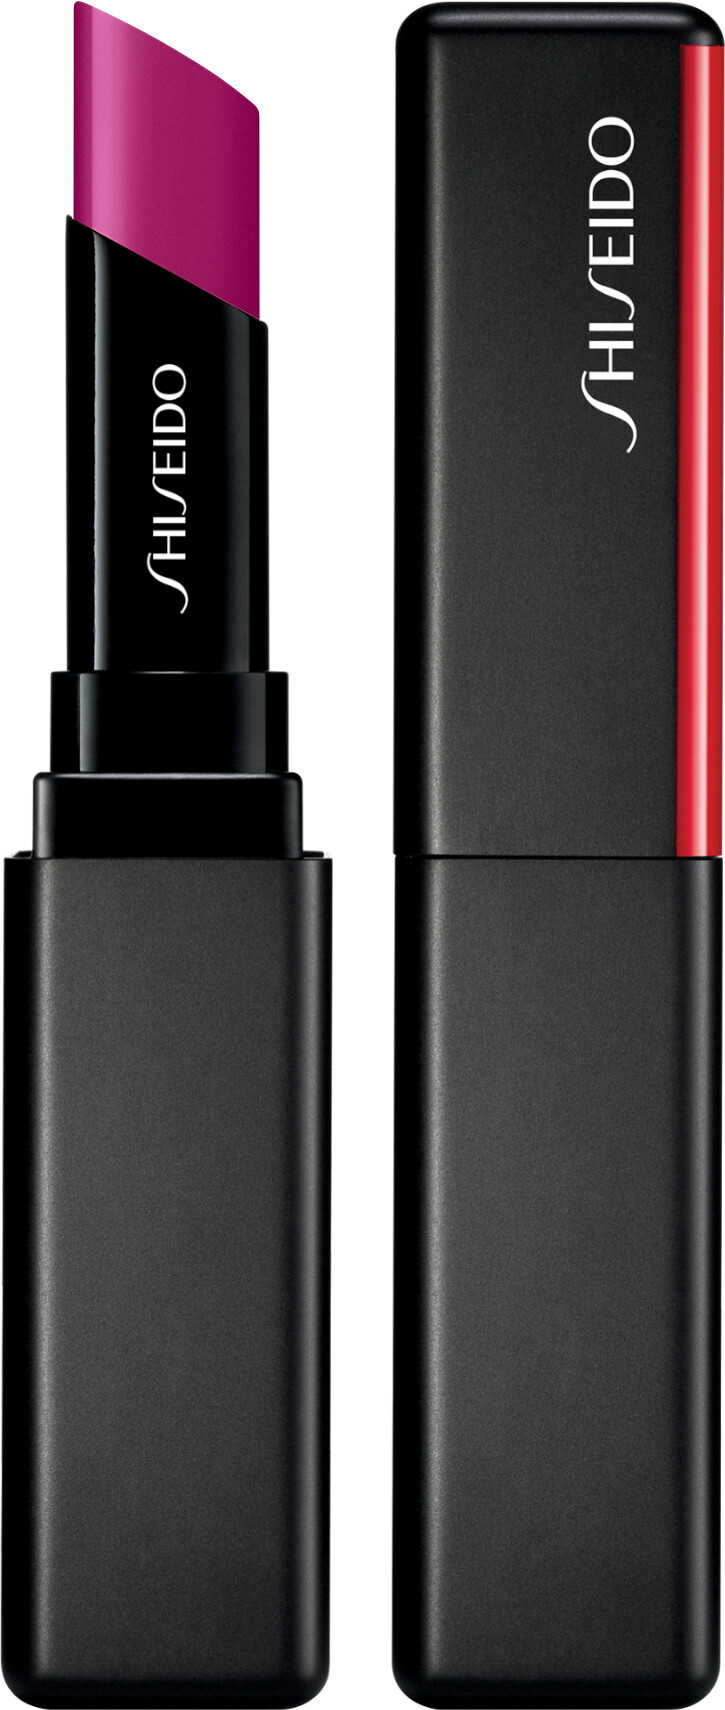 Shiseido ColorGel LipBalm 2g 109 - Wisteria